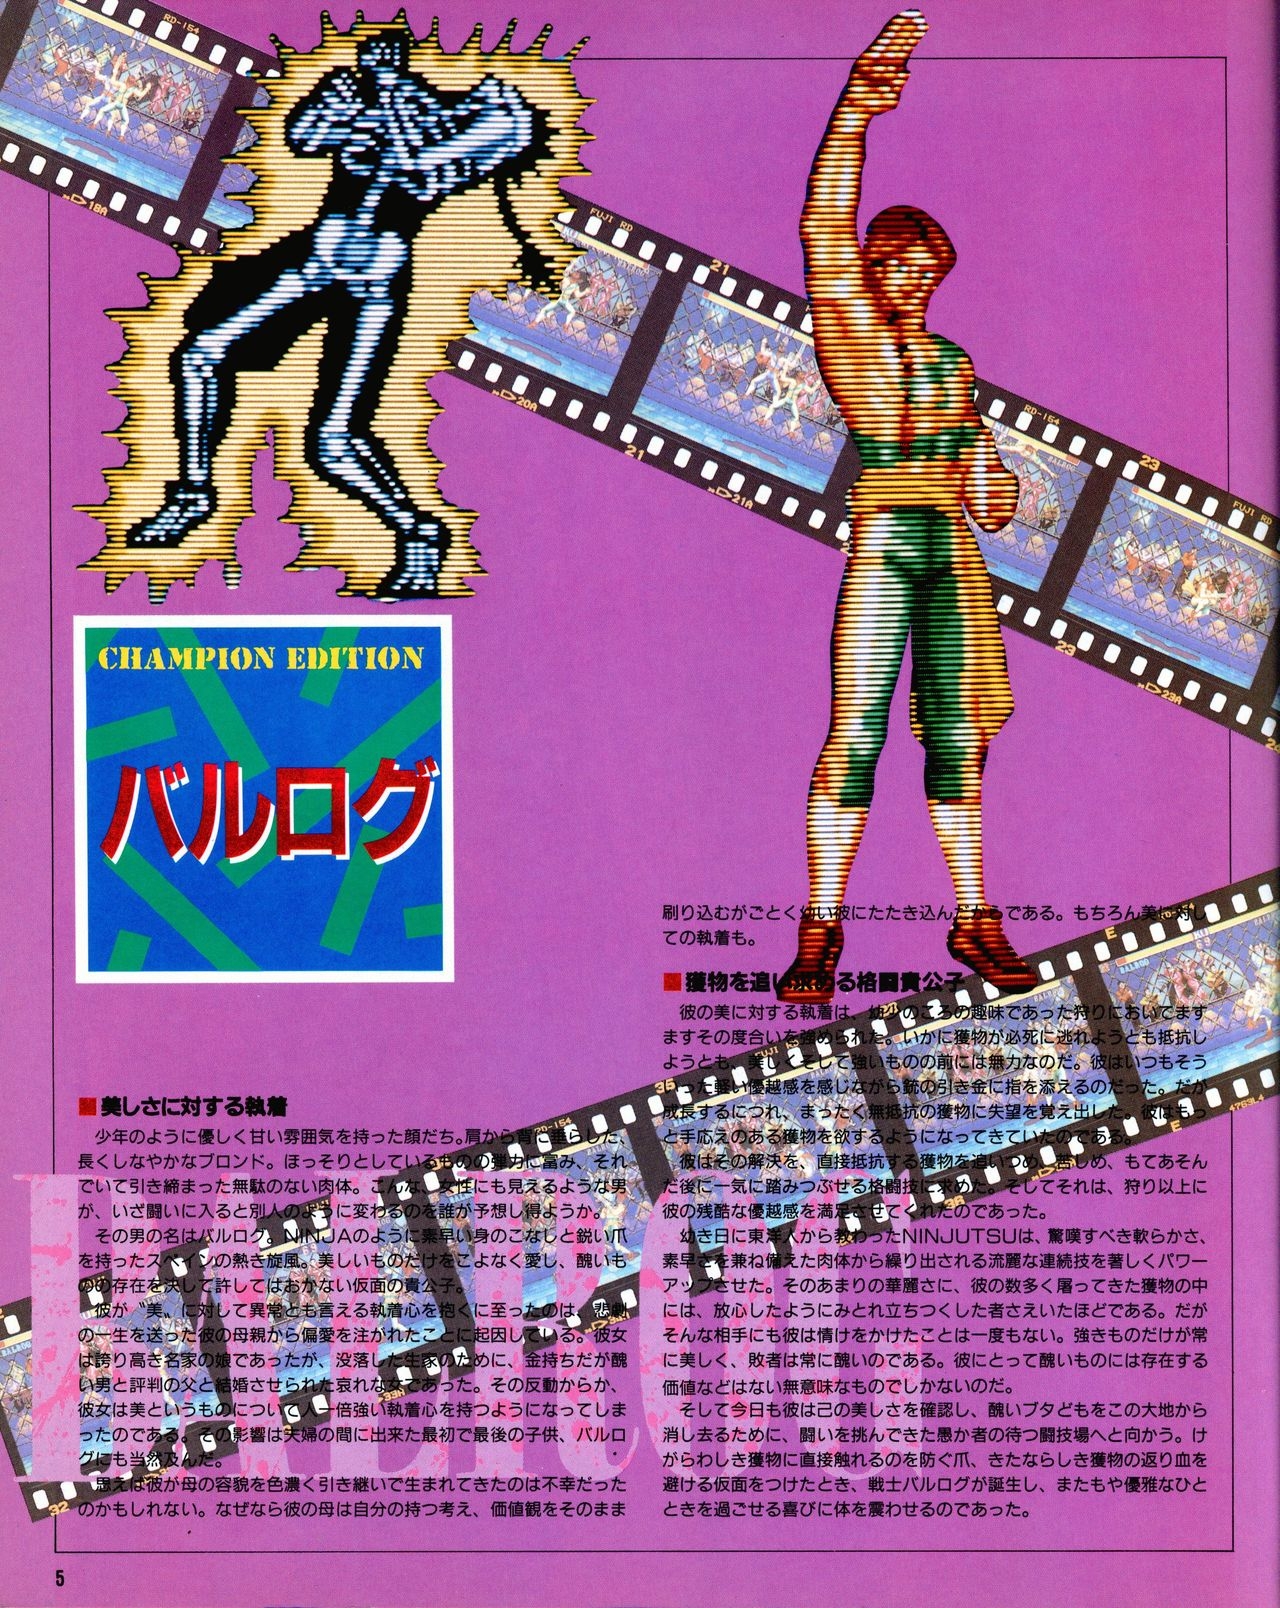 Street Fighter II Dash - Gamest special issue 77 6